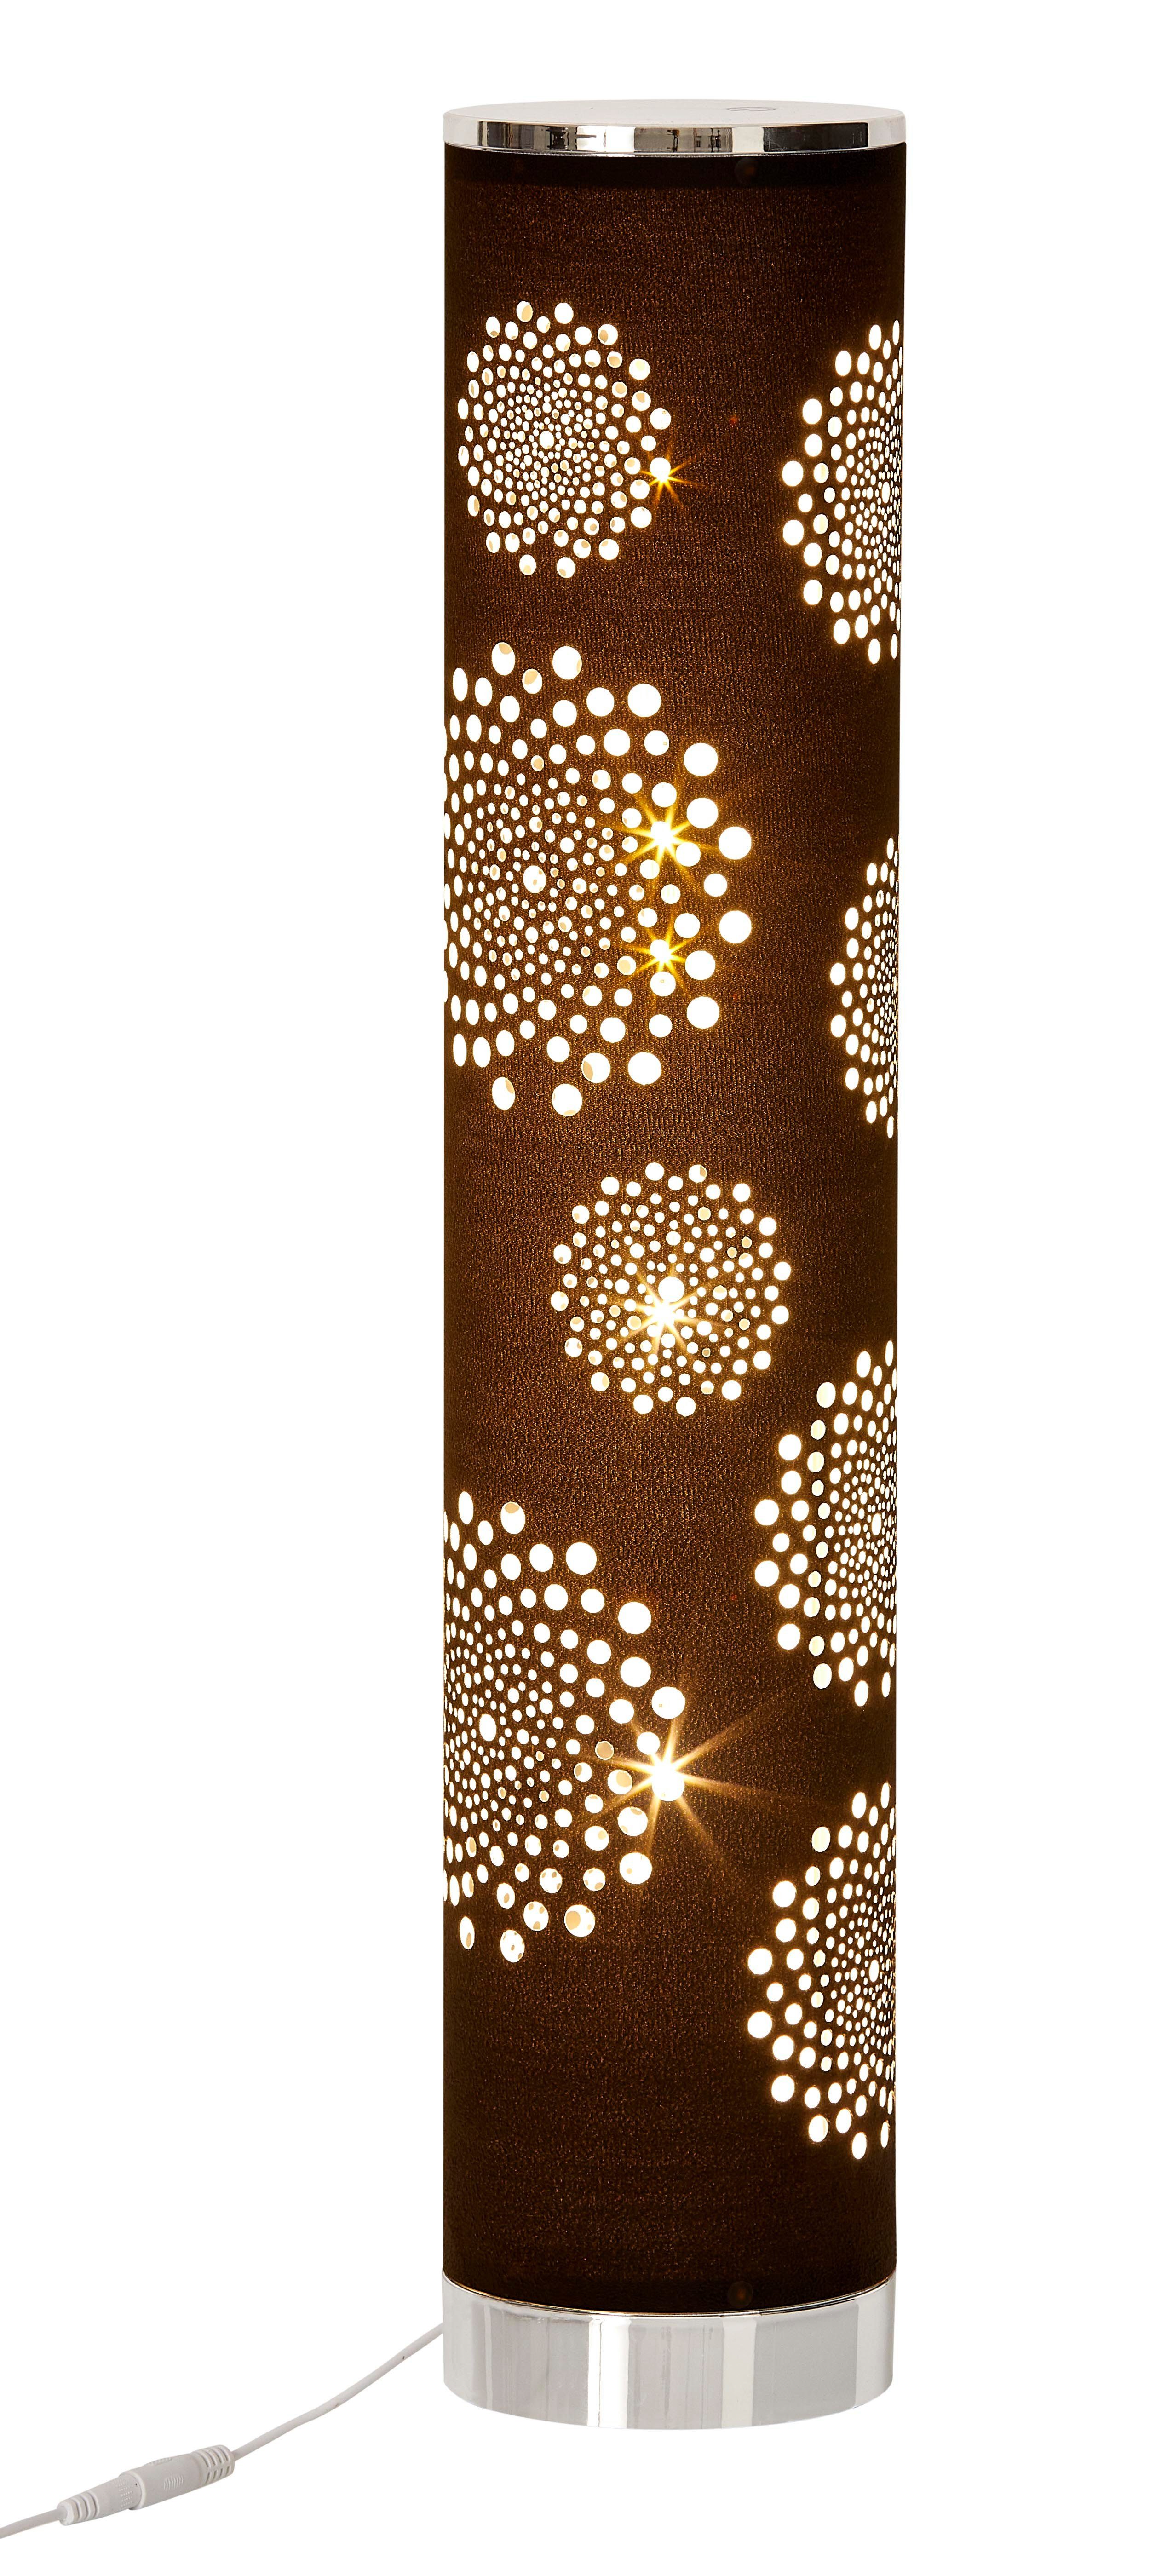 Northpoint Stehlampe LED Lichtsäule Stehlampe 64cm hoch Pusteblume - Grau (RGBW)